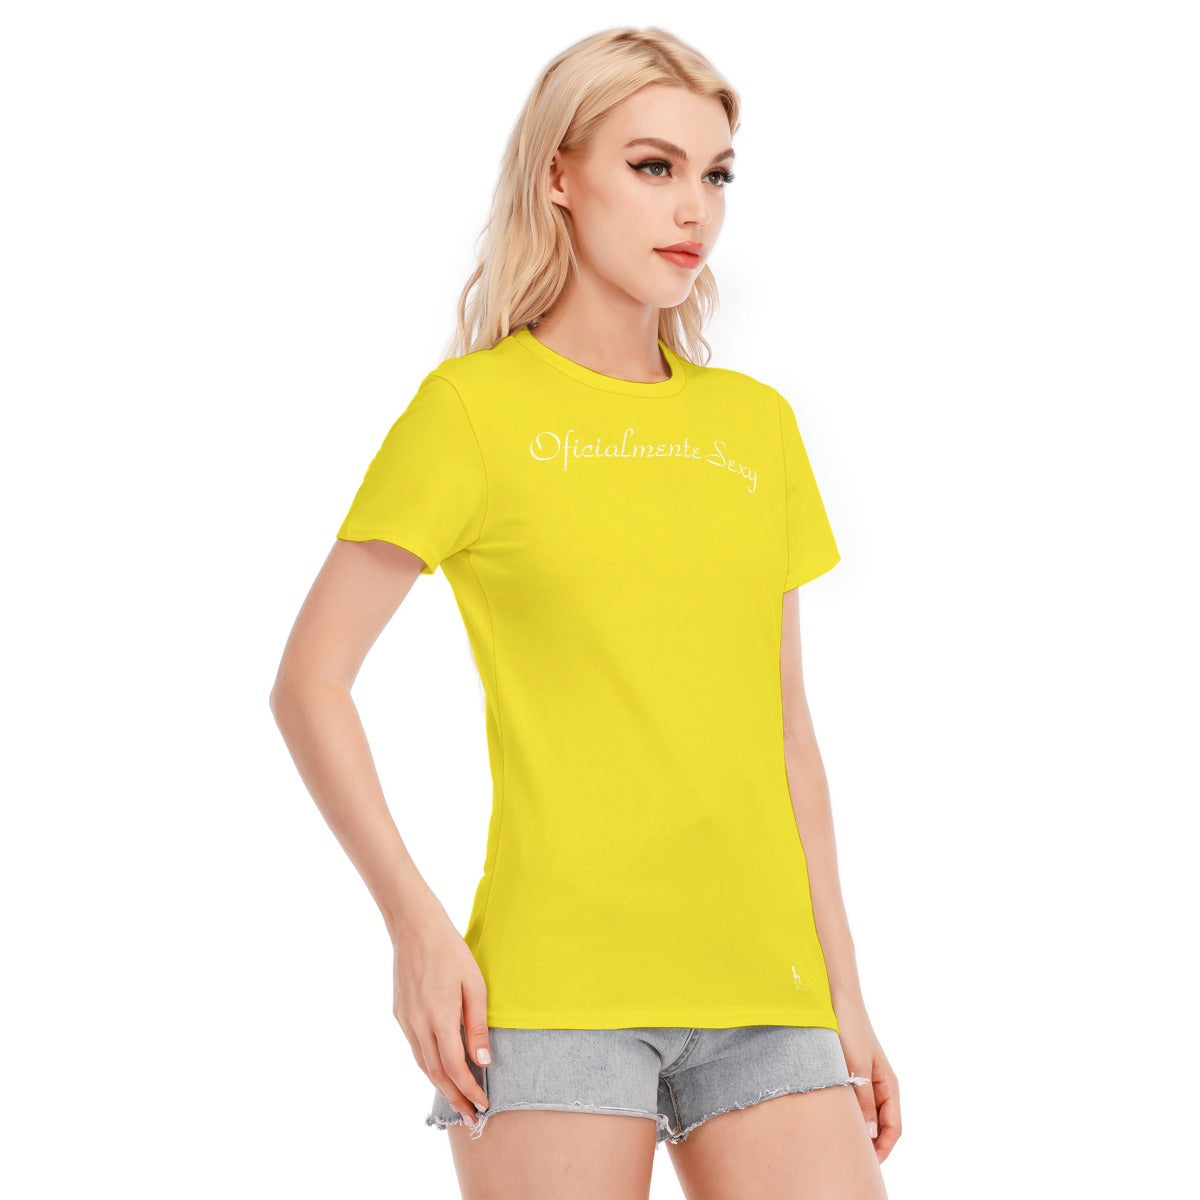 👚 Oficialmente Sexy Colors Collection Lemon Yellow With White Logo Women's Round Neck T-Shirt | 190GSM Cotton Color #F8E71C 👚